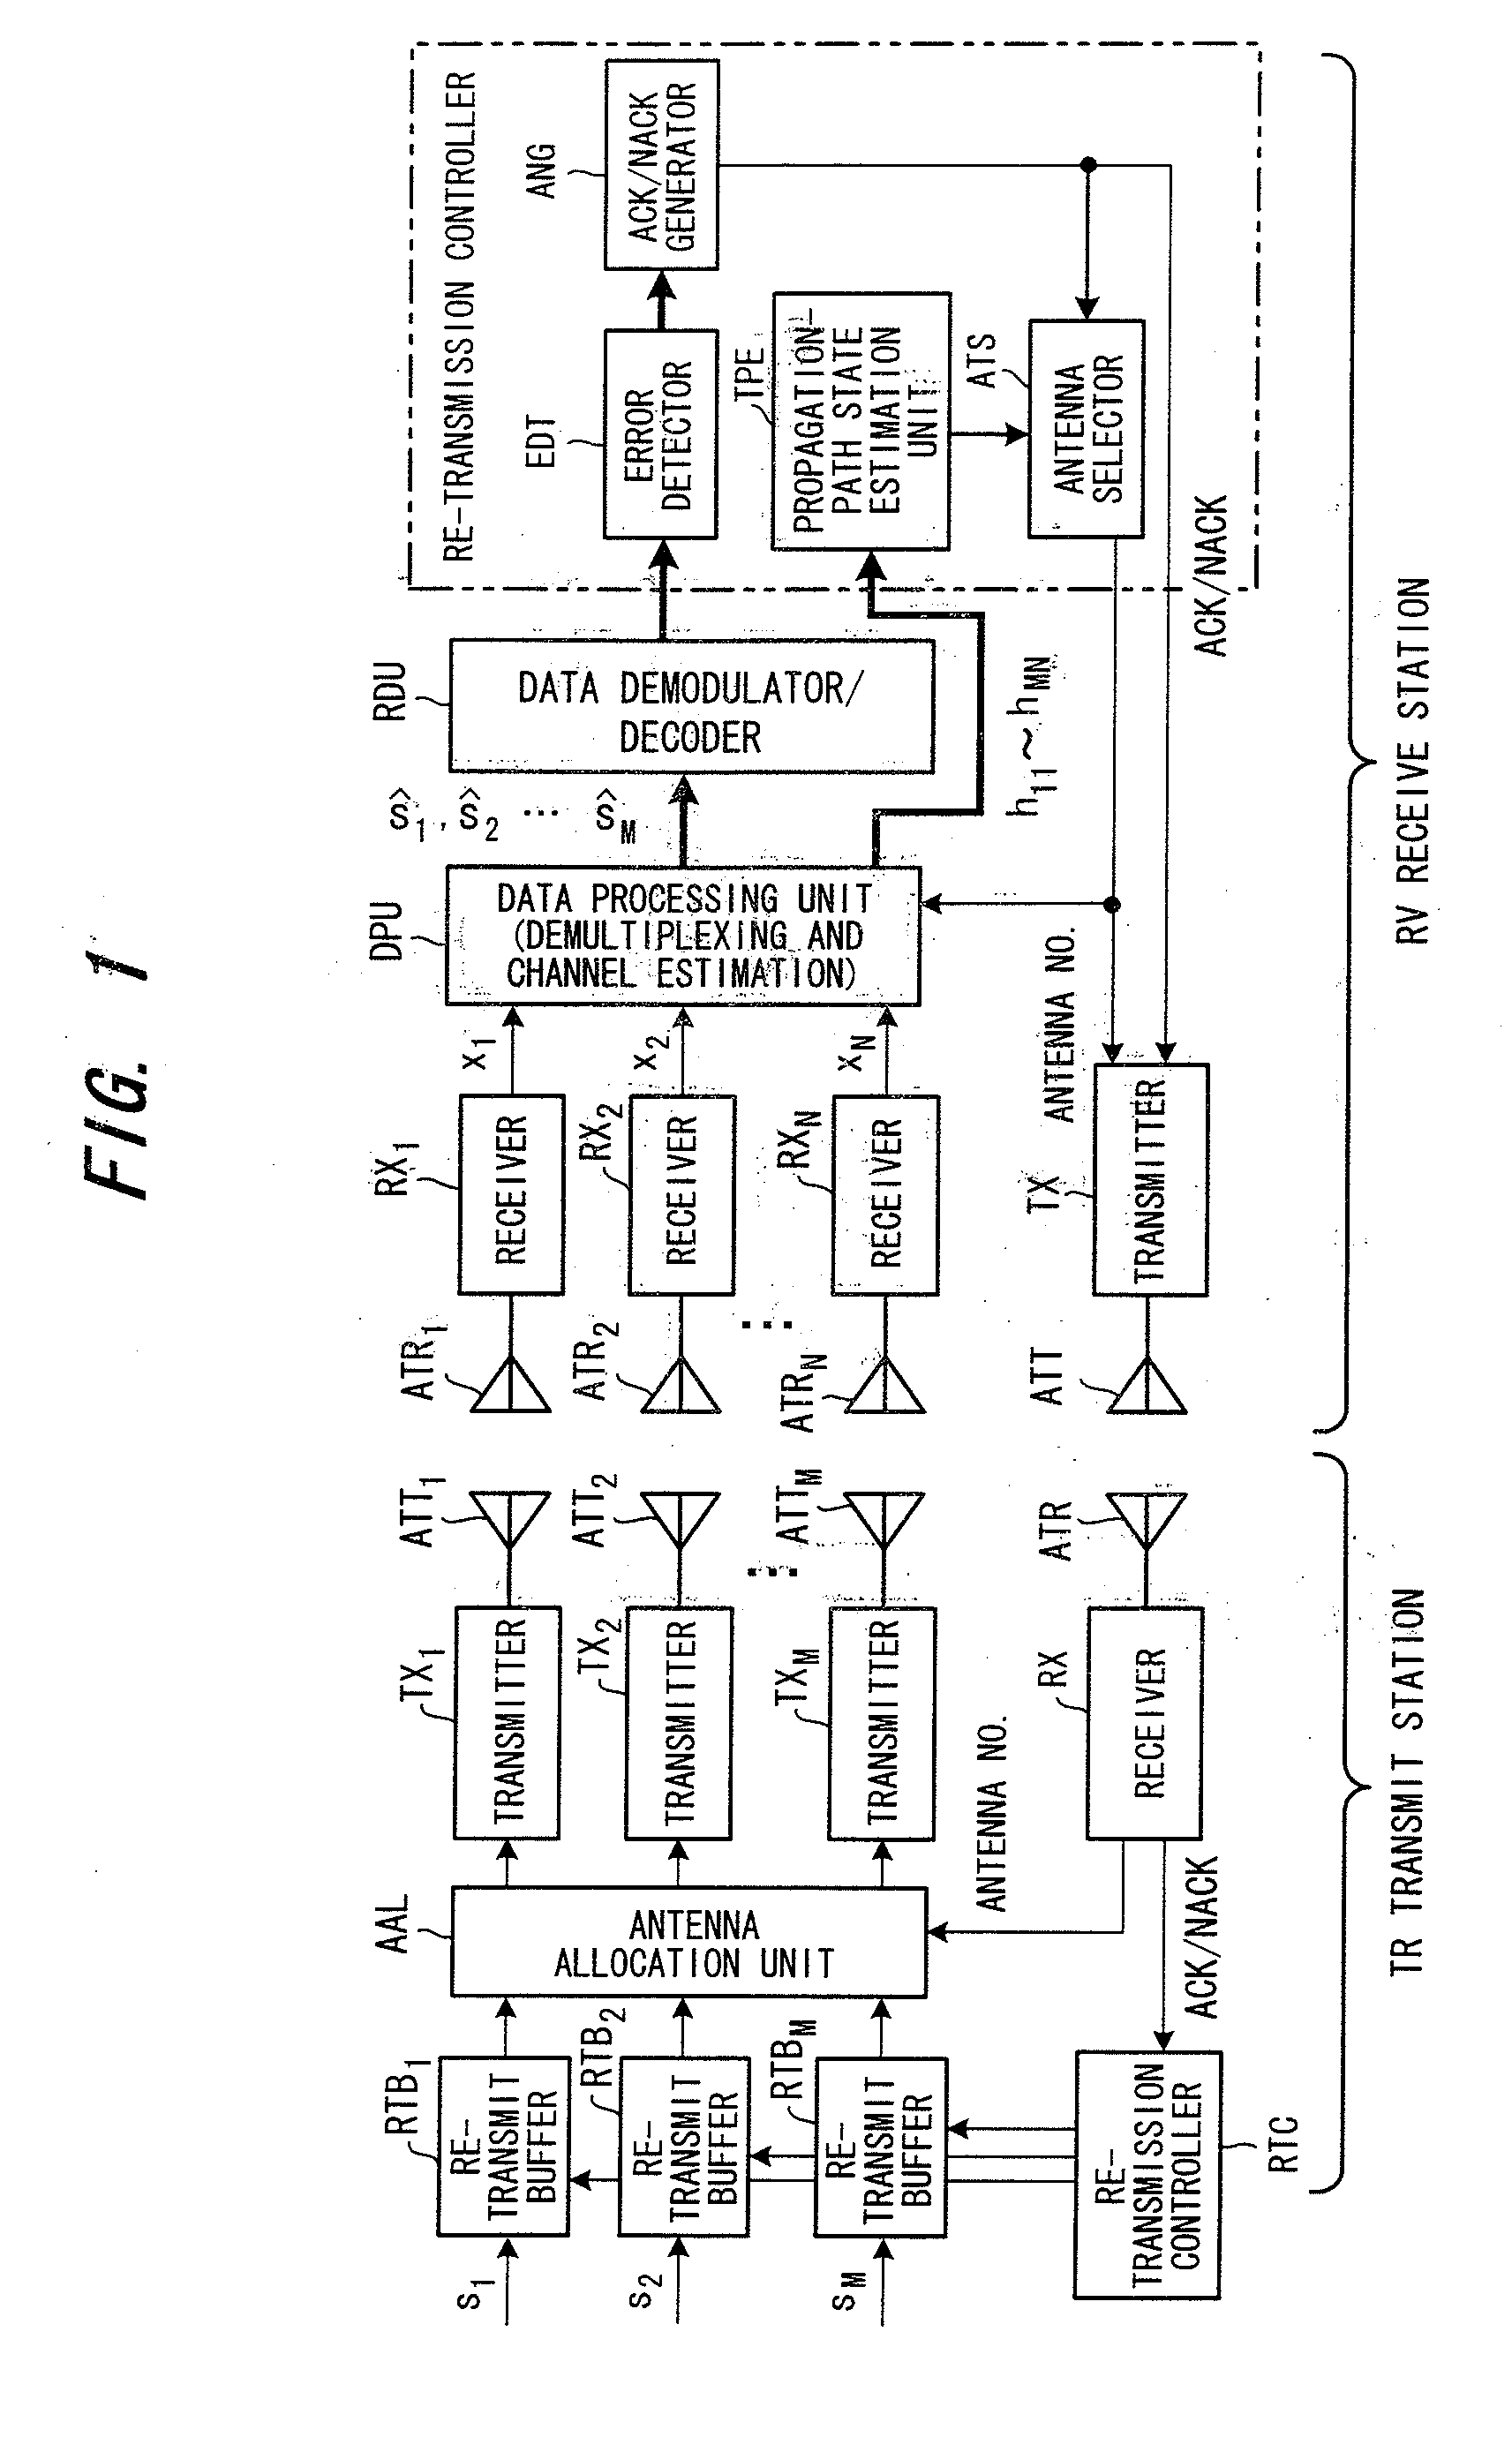 Multiple-Input Multiple-Output Transmission System